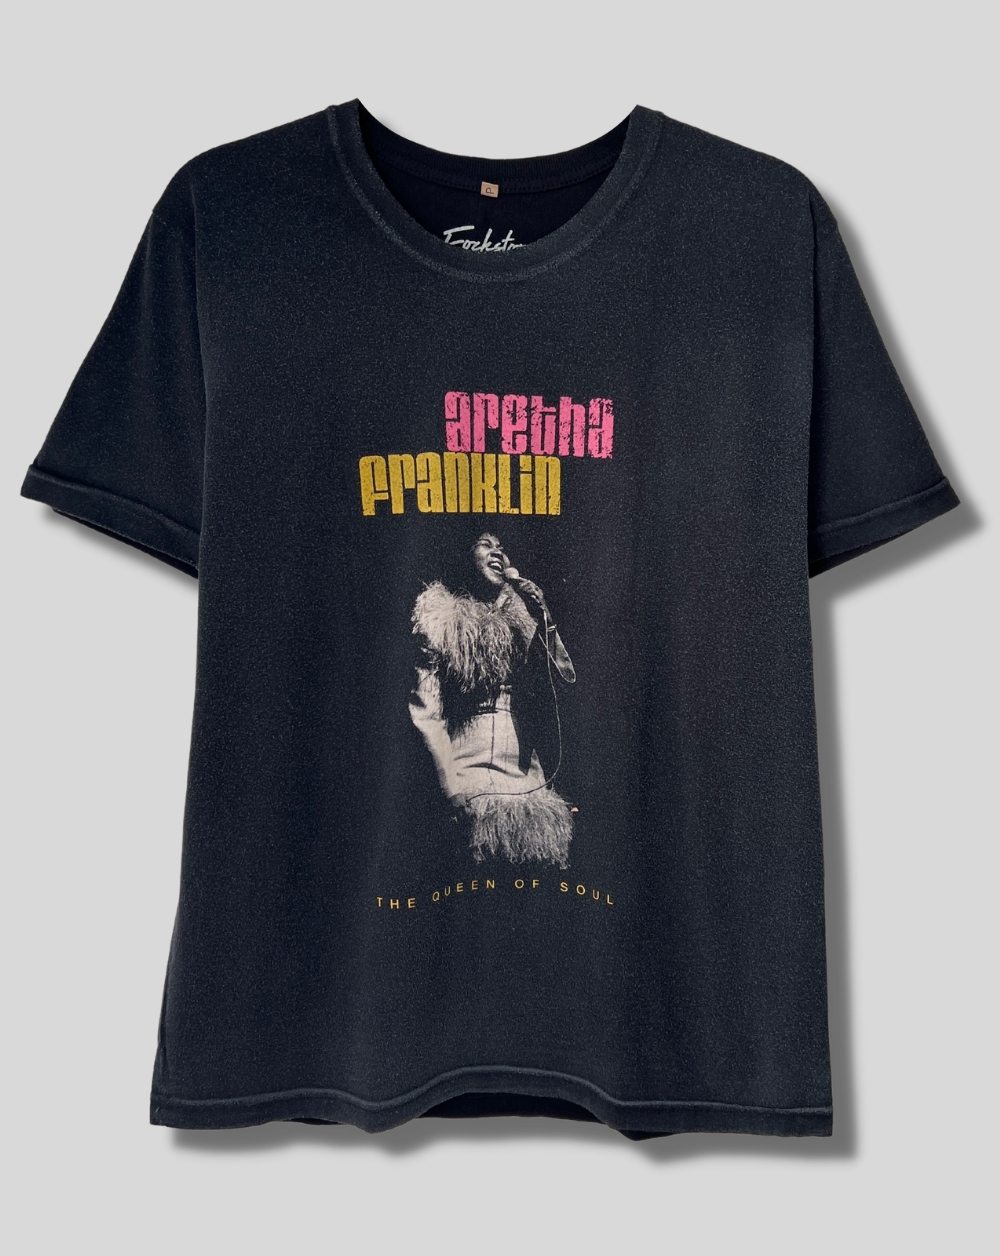 Camiseta Aretha Franklin